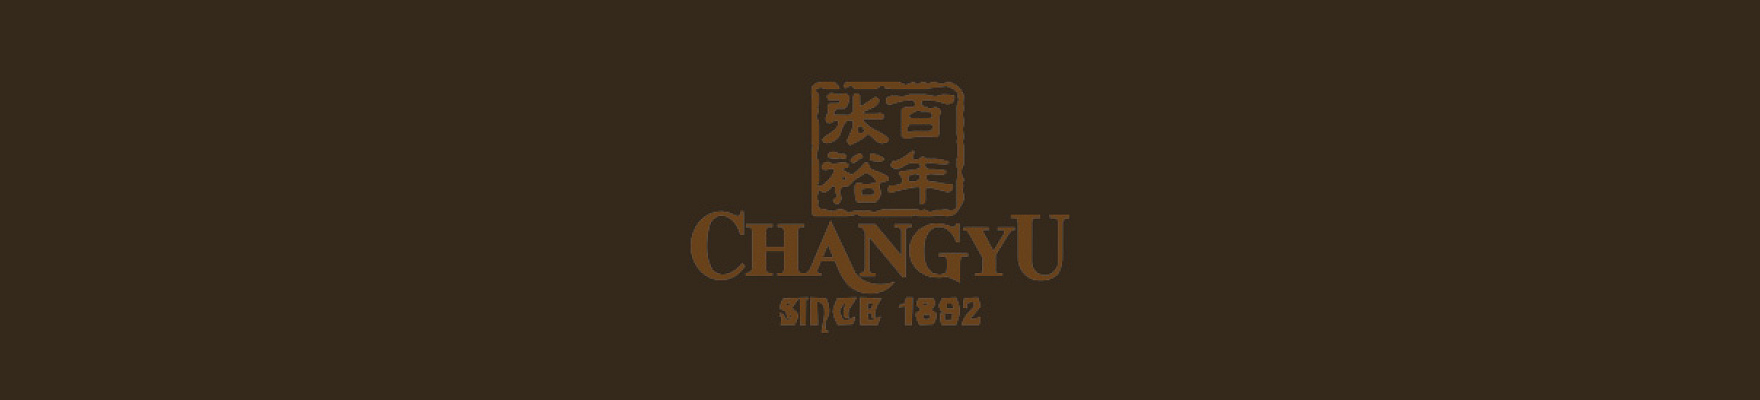 Bodega Changyu